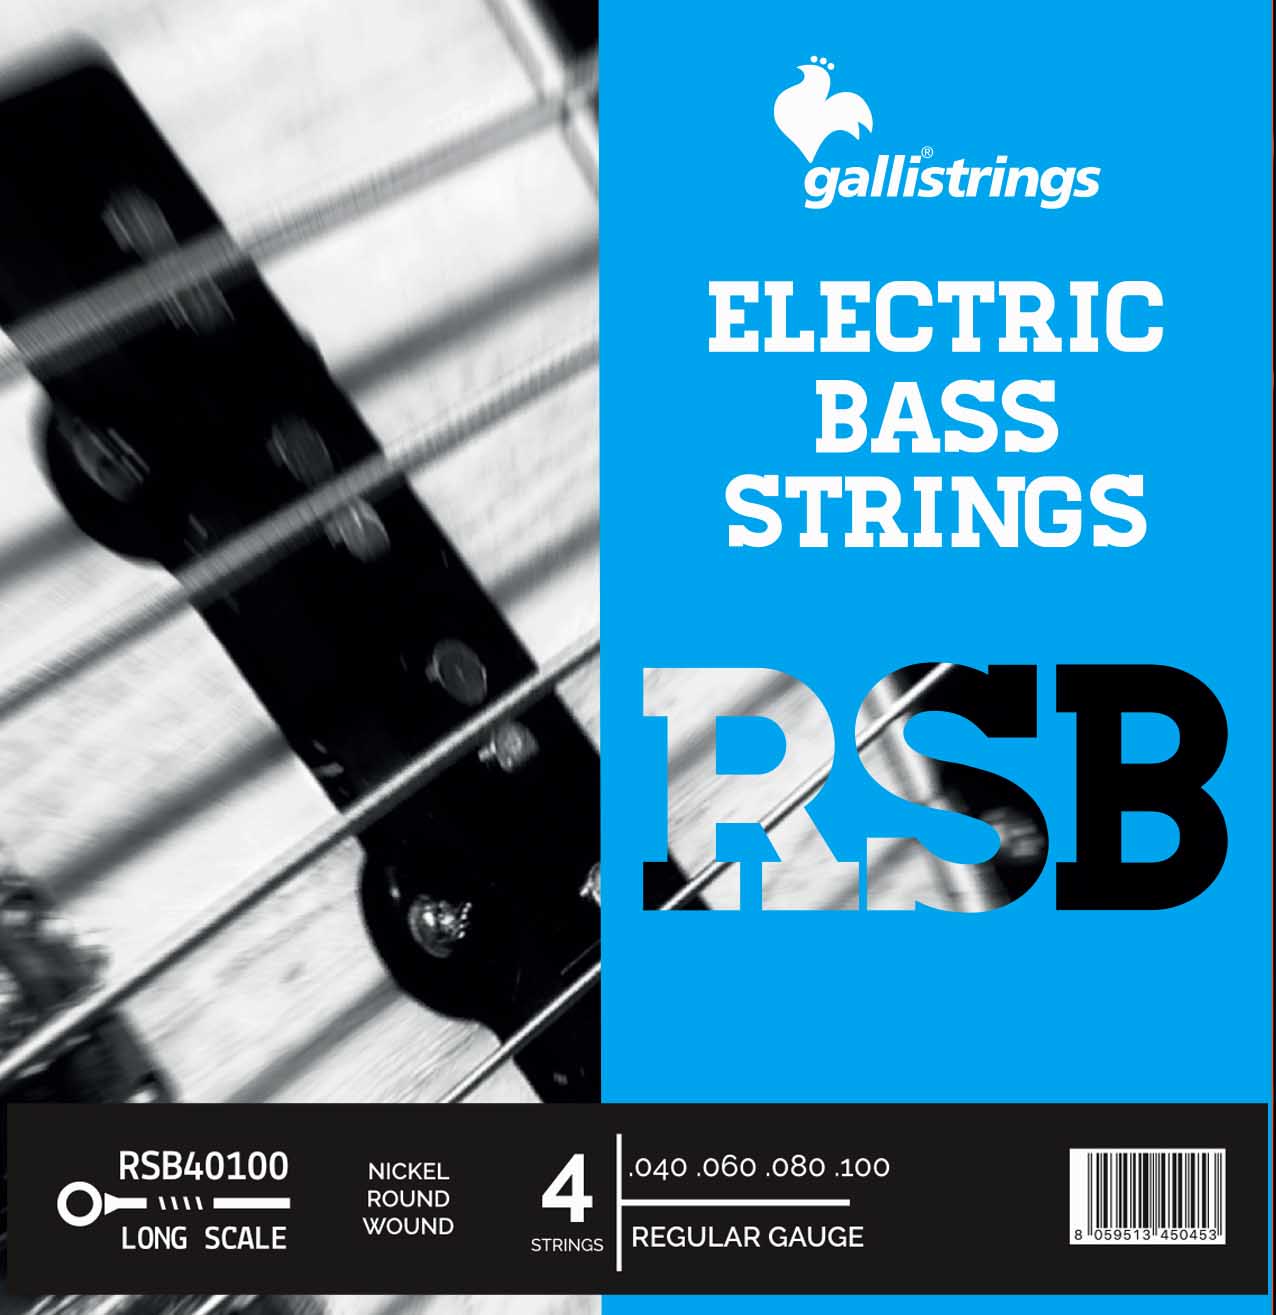 RSB40100 4 strings Regular